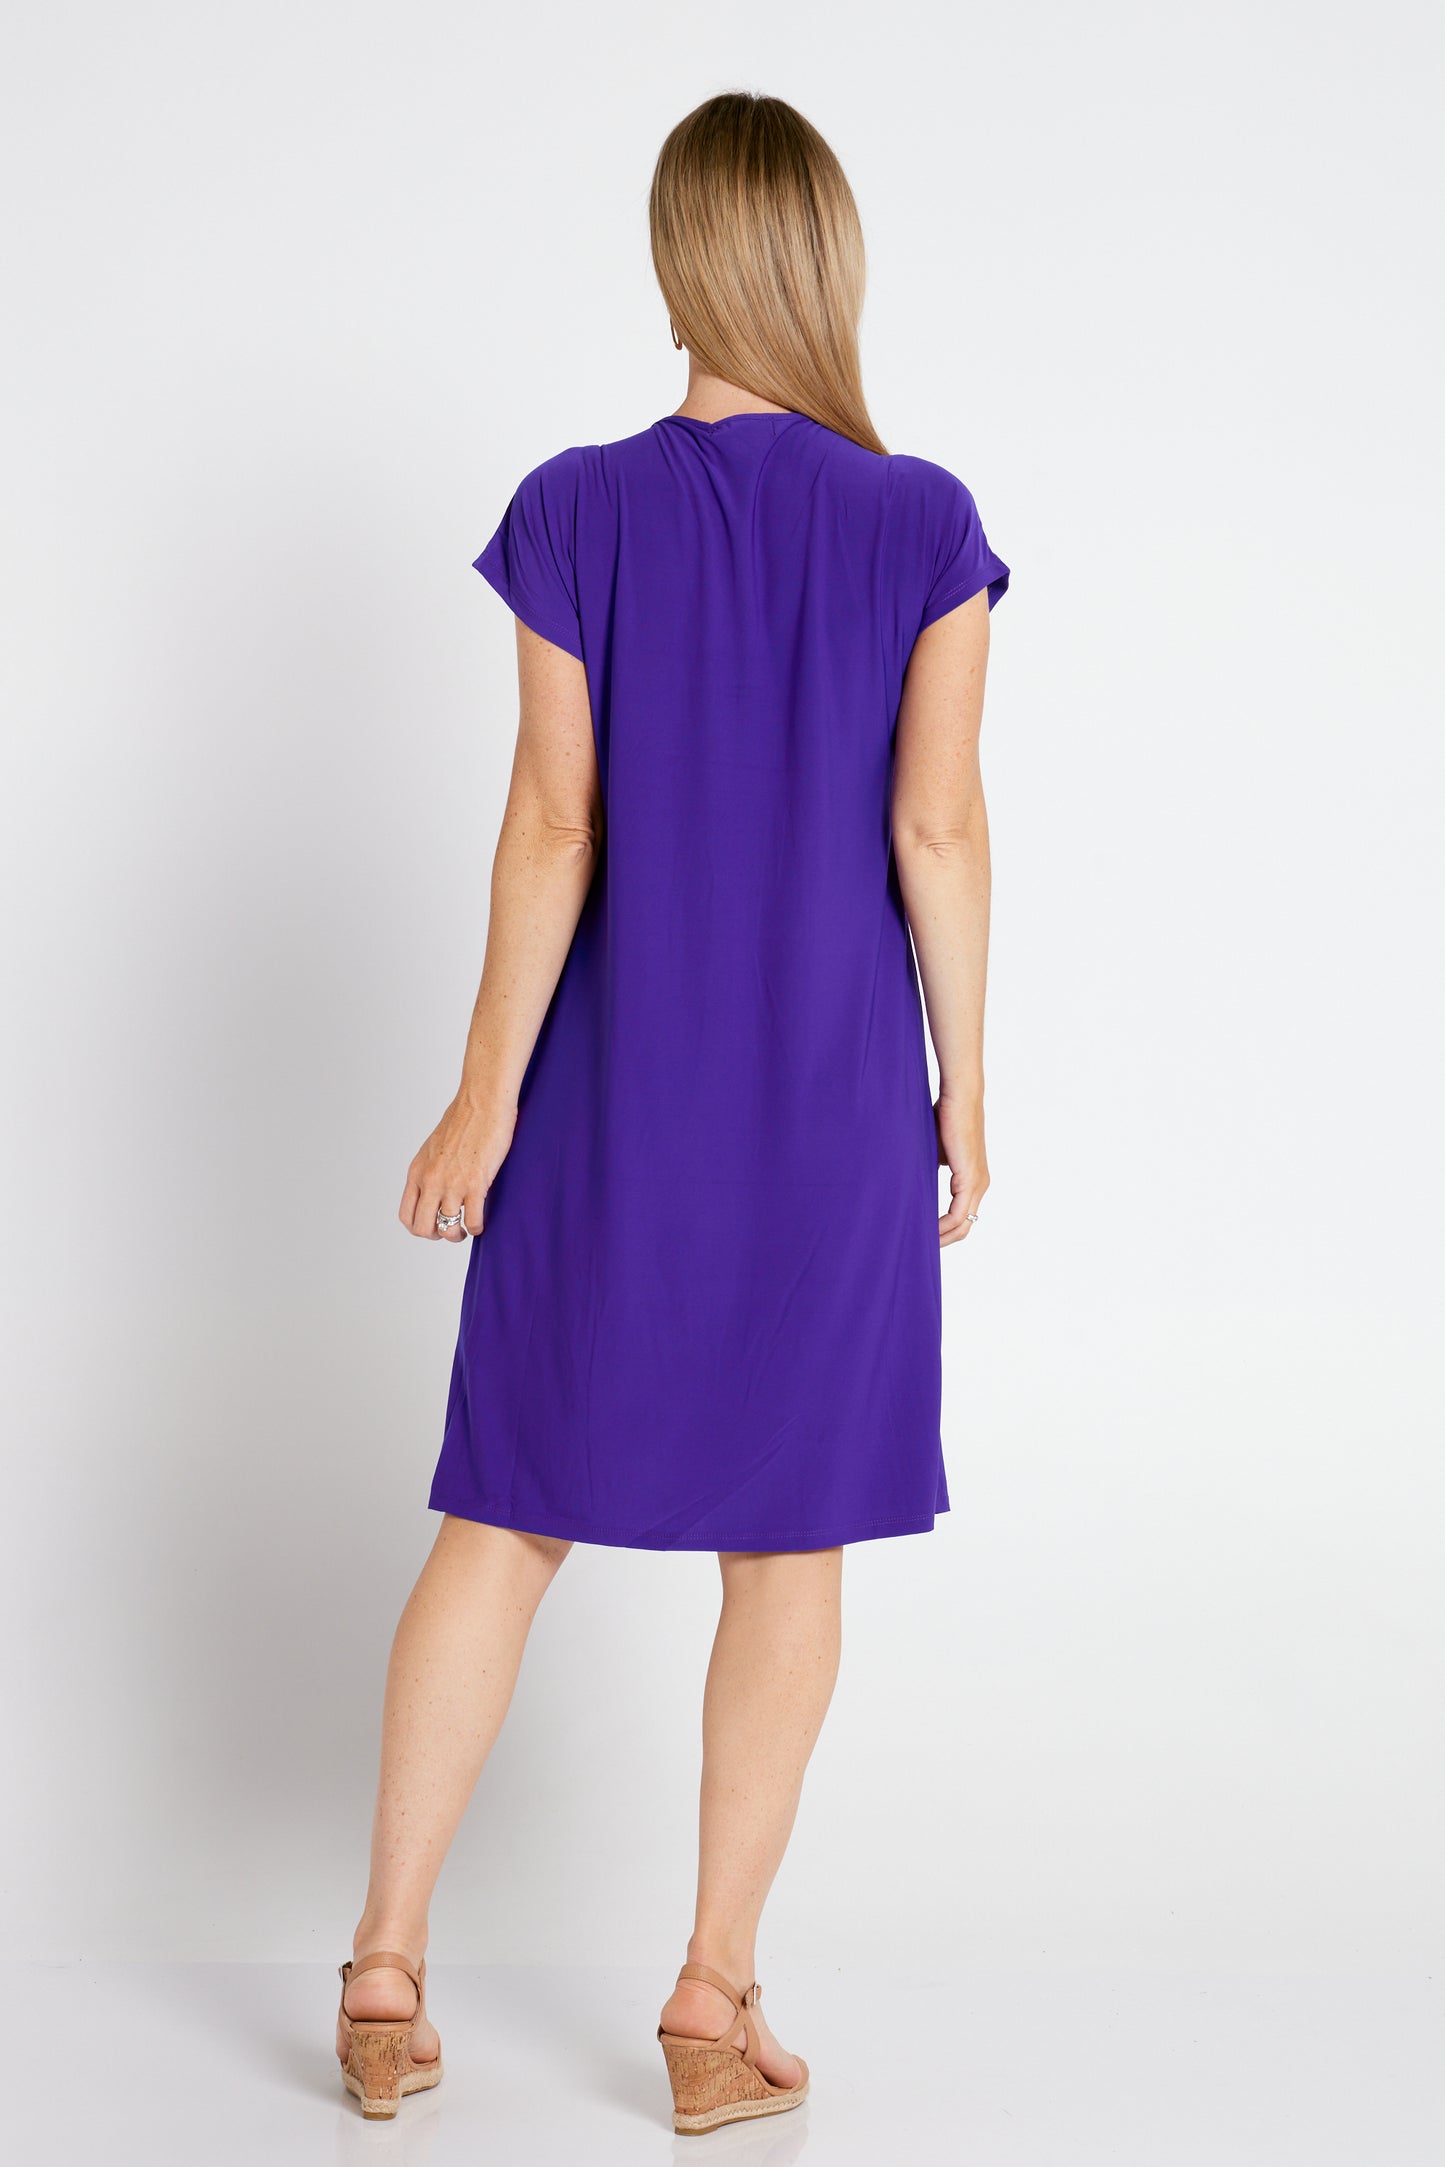 Anwen Must Have Dress - Purple